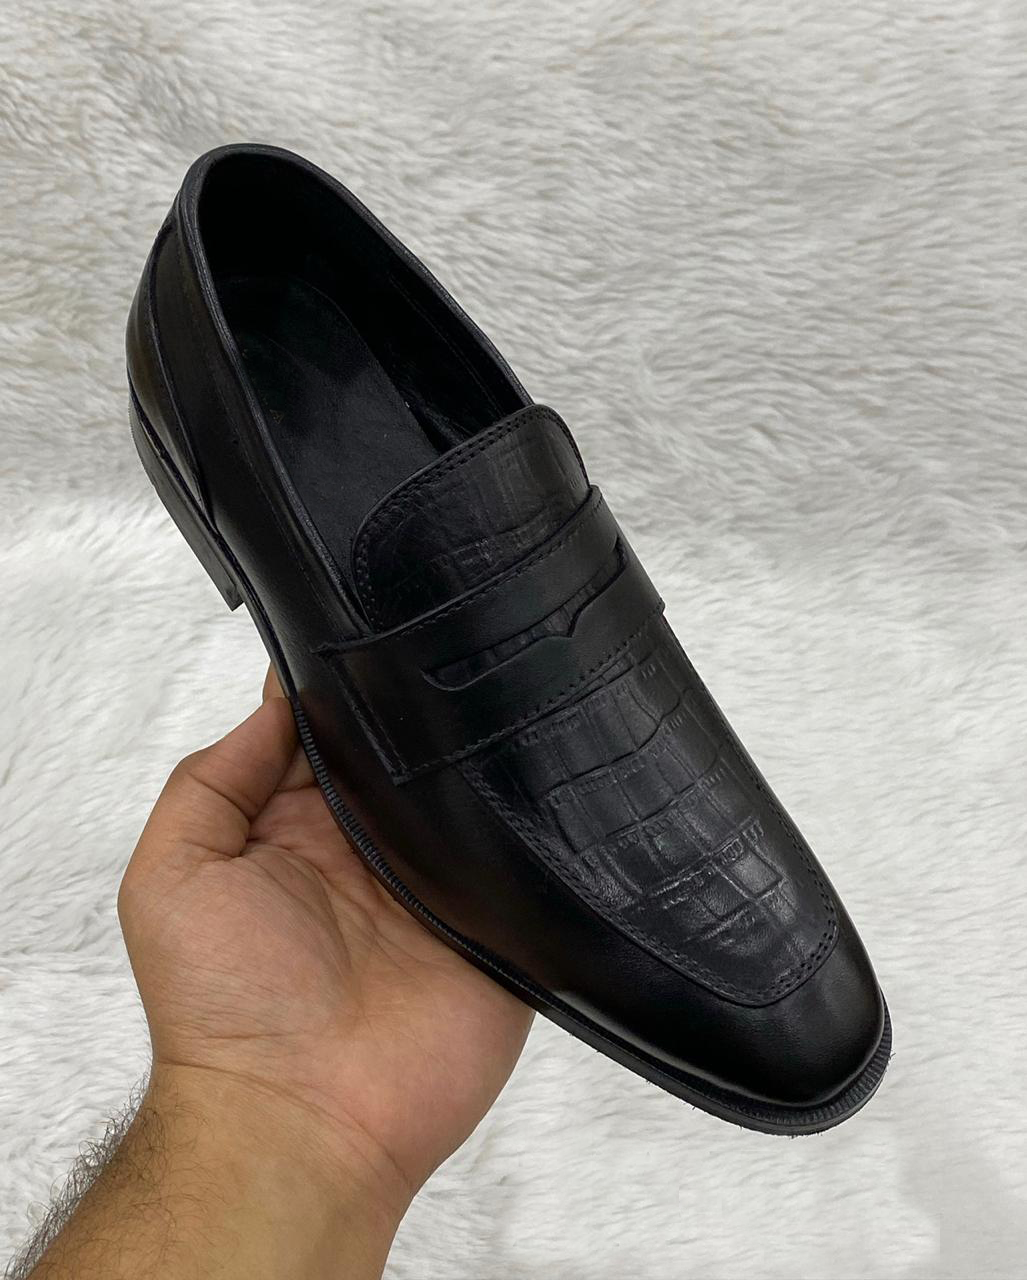 Stylish Leather Patent Slipons With Tassles For Men-JonasParamount